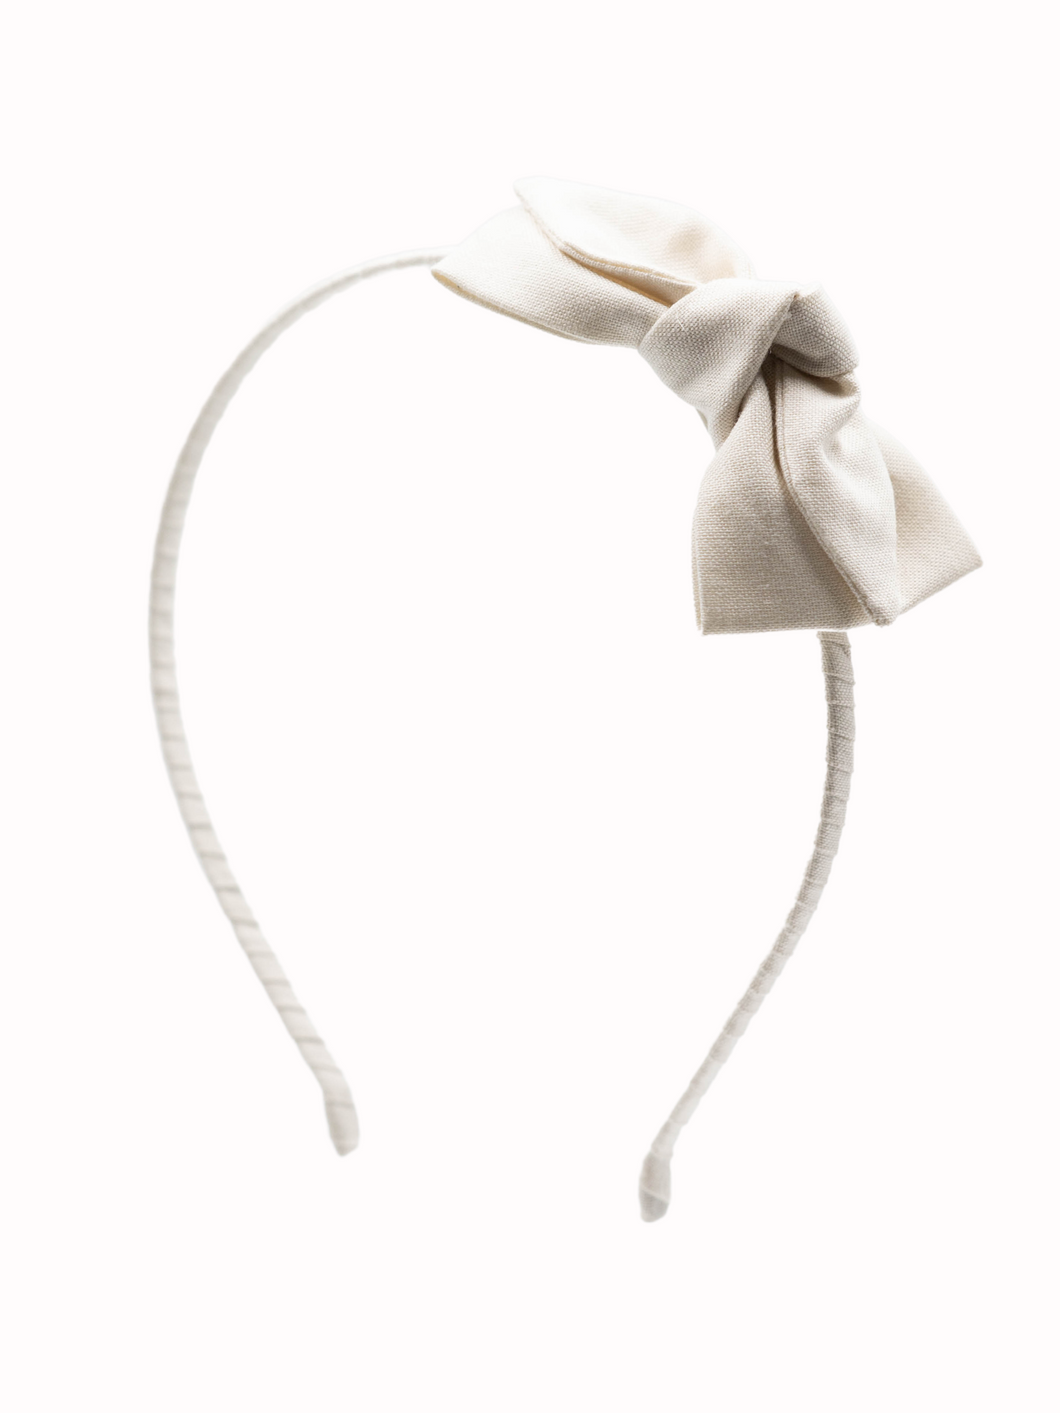 Livy Lou Collection Ivory Organic Cotton Double Bow Headband